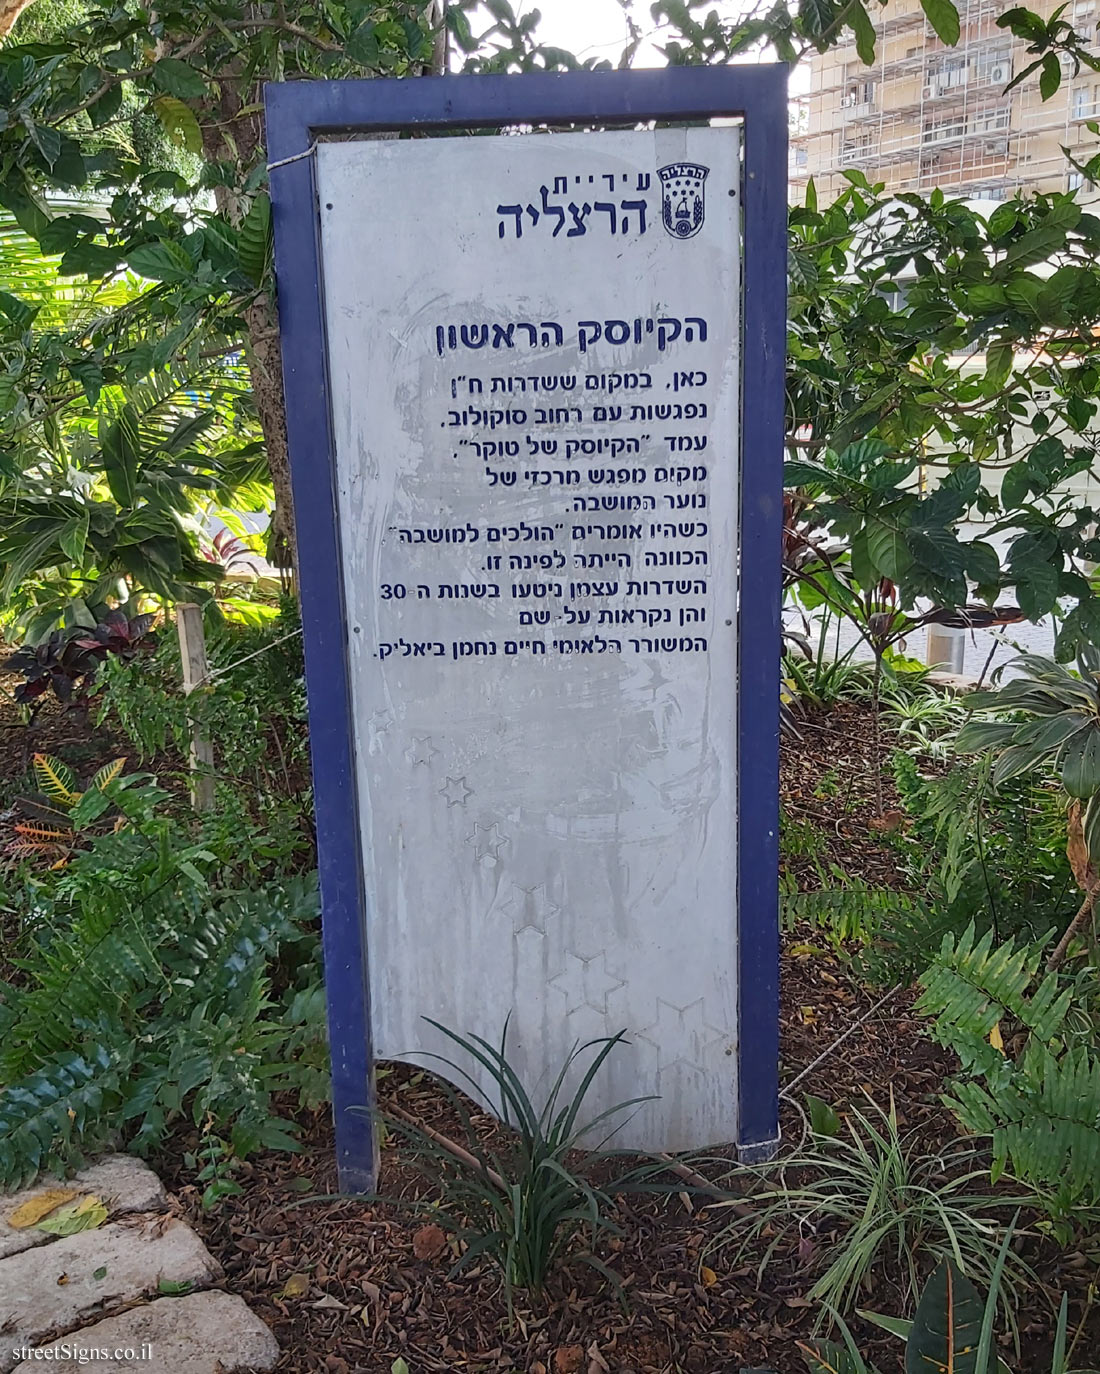 Herzliya - The first kiosk